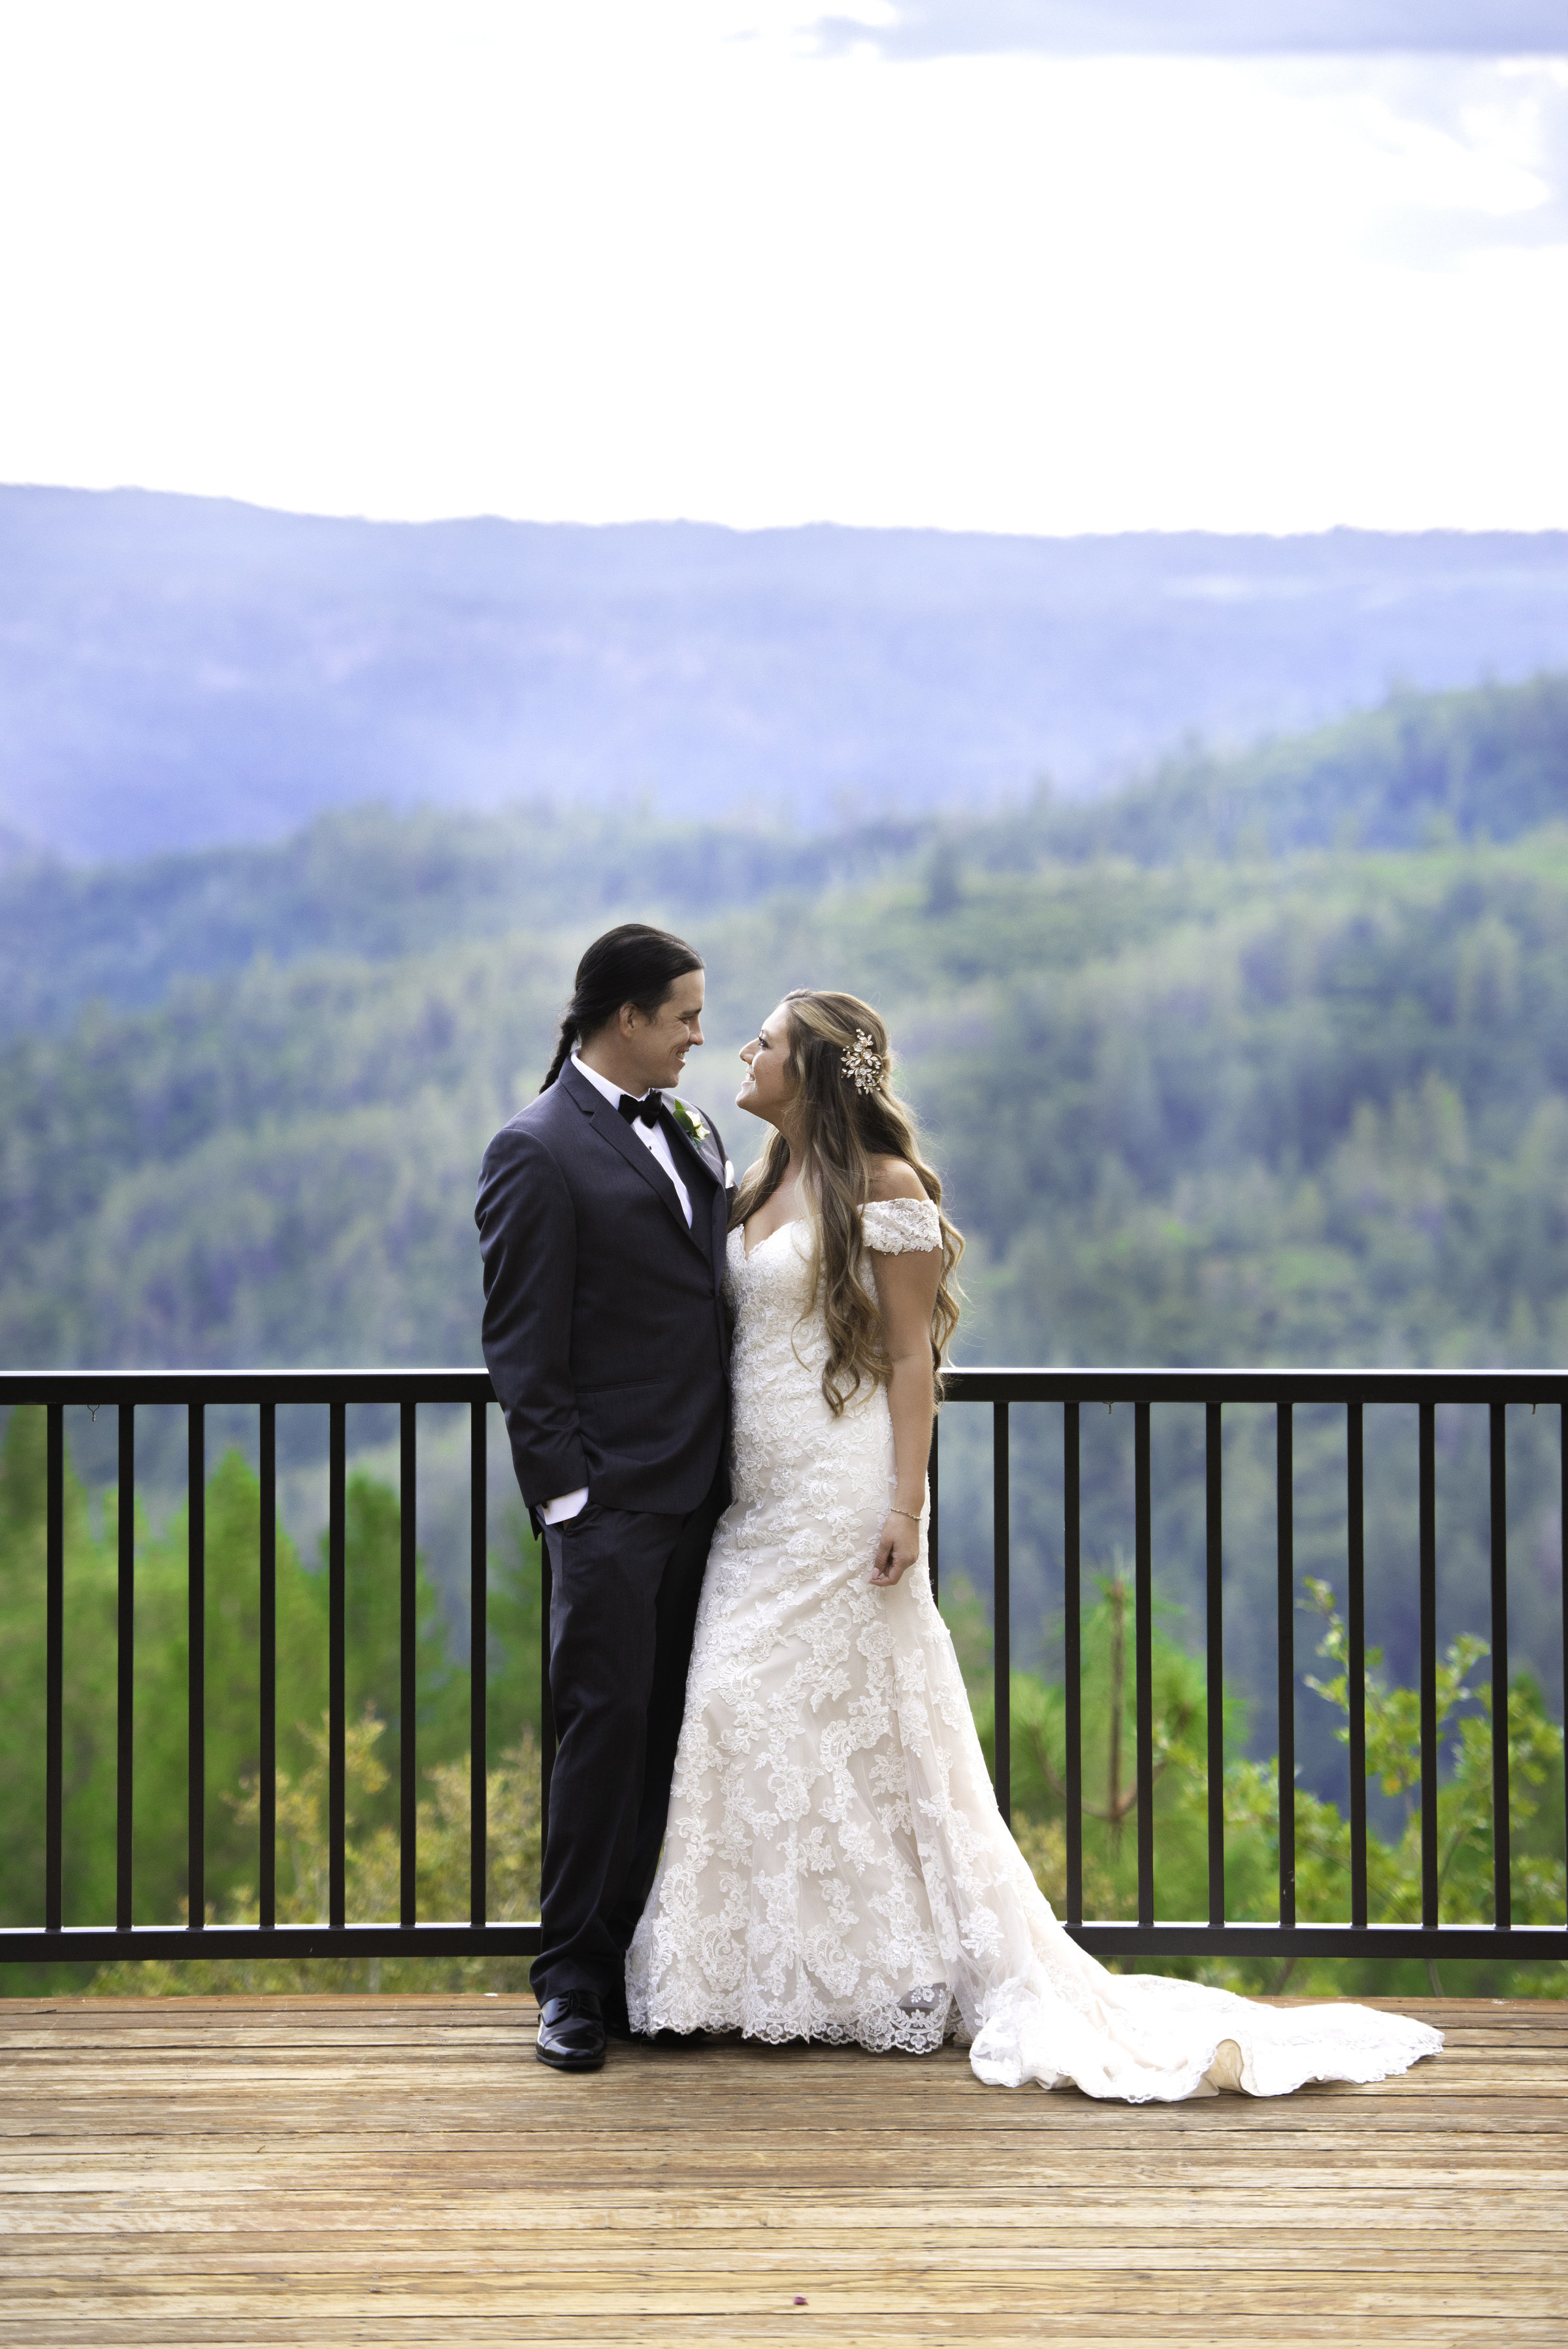 Desrae & Robert Wedding at Mountain shadows retreat With AshleyRo Photography_-868